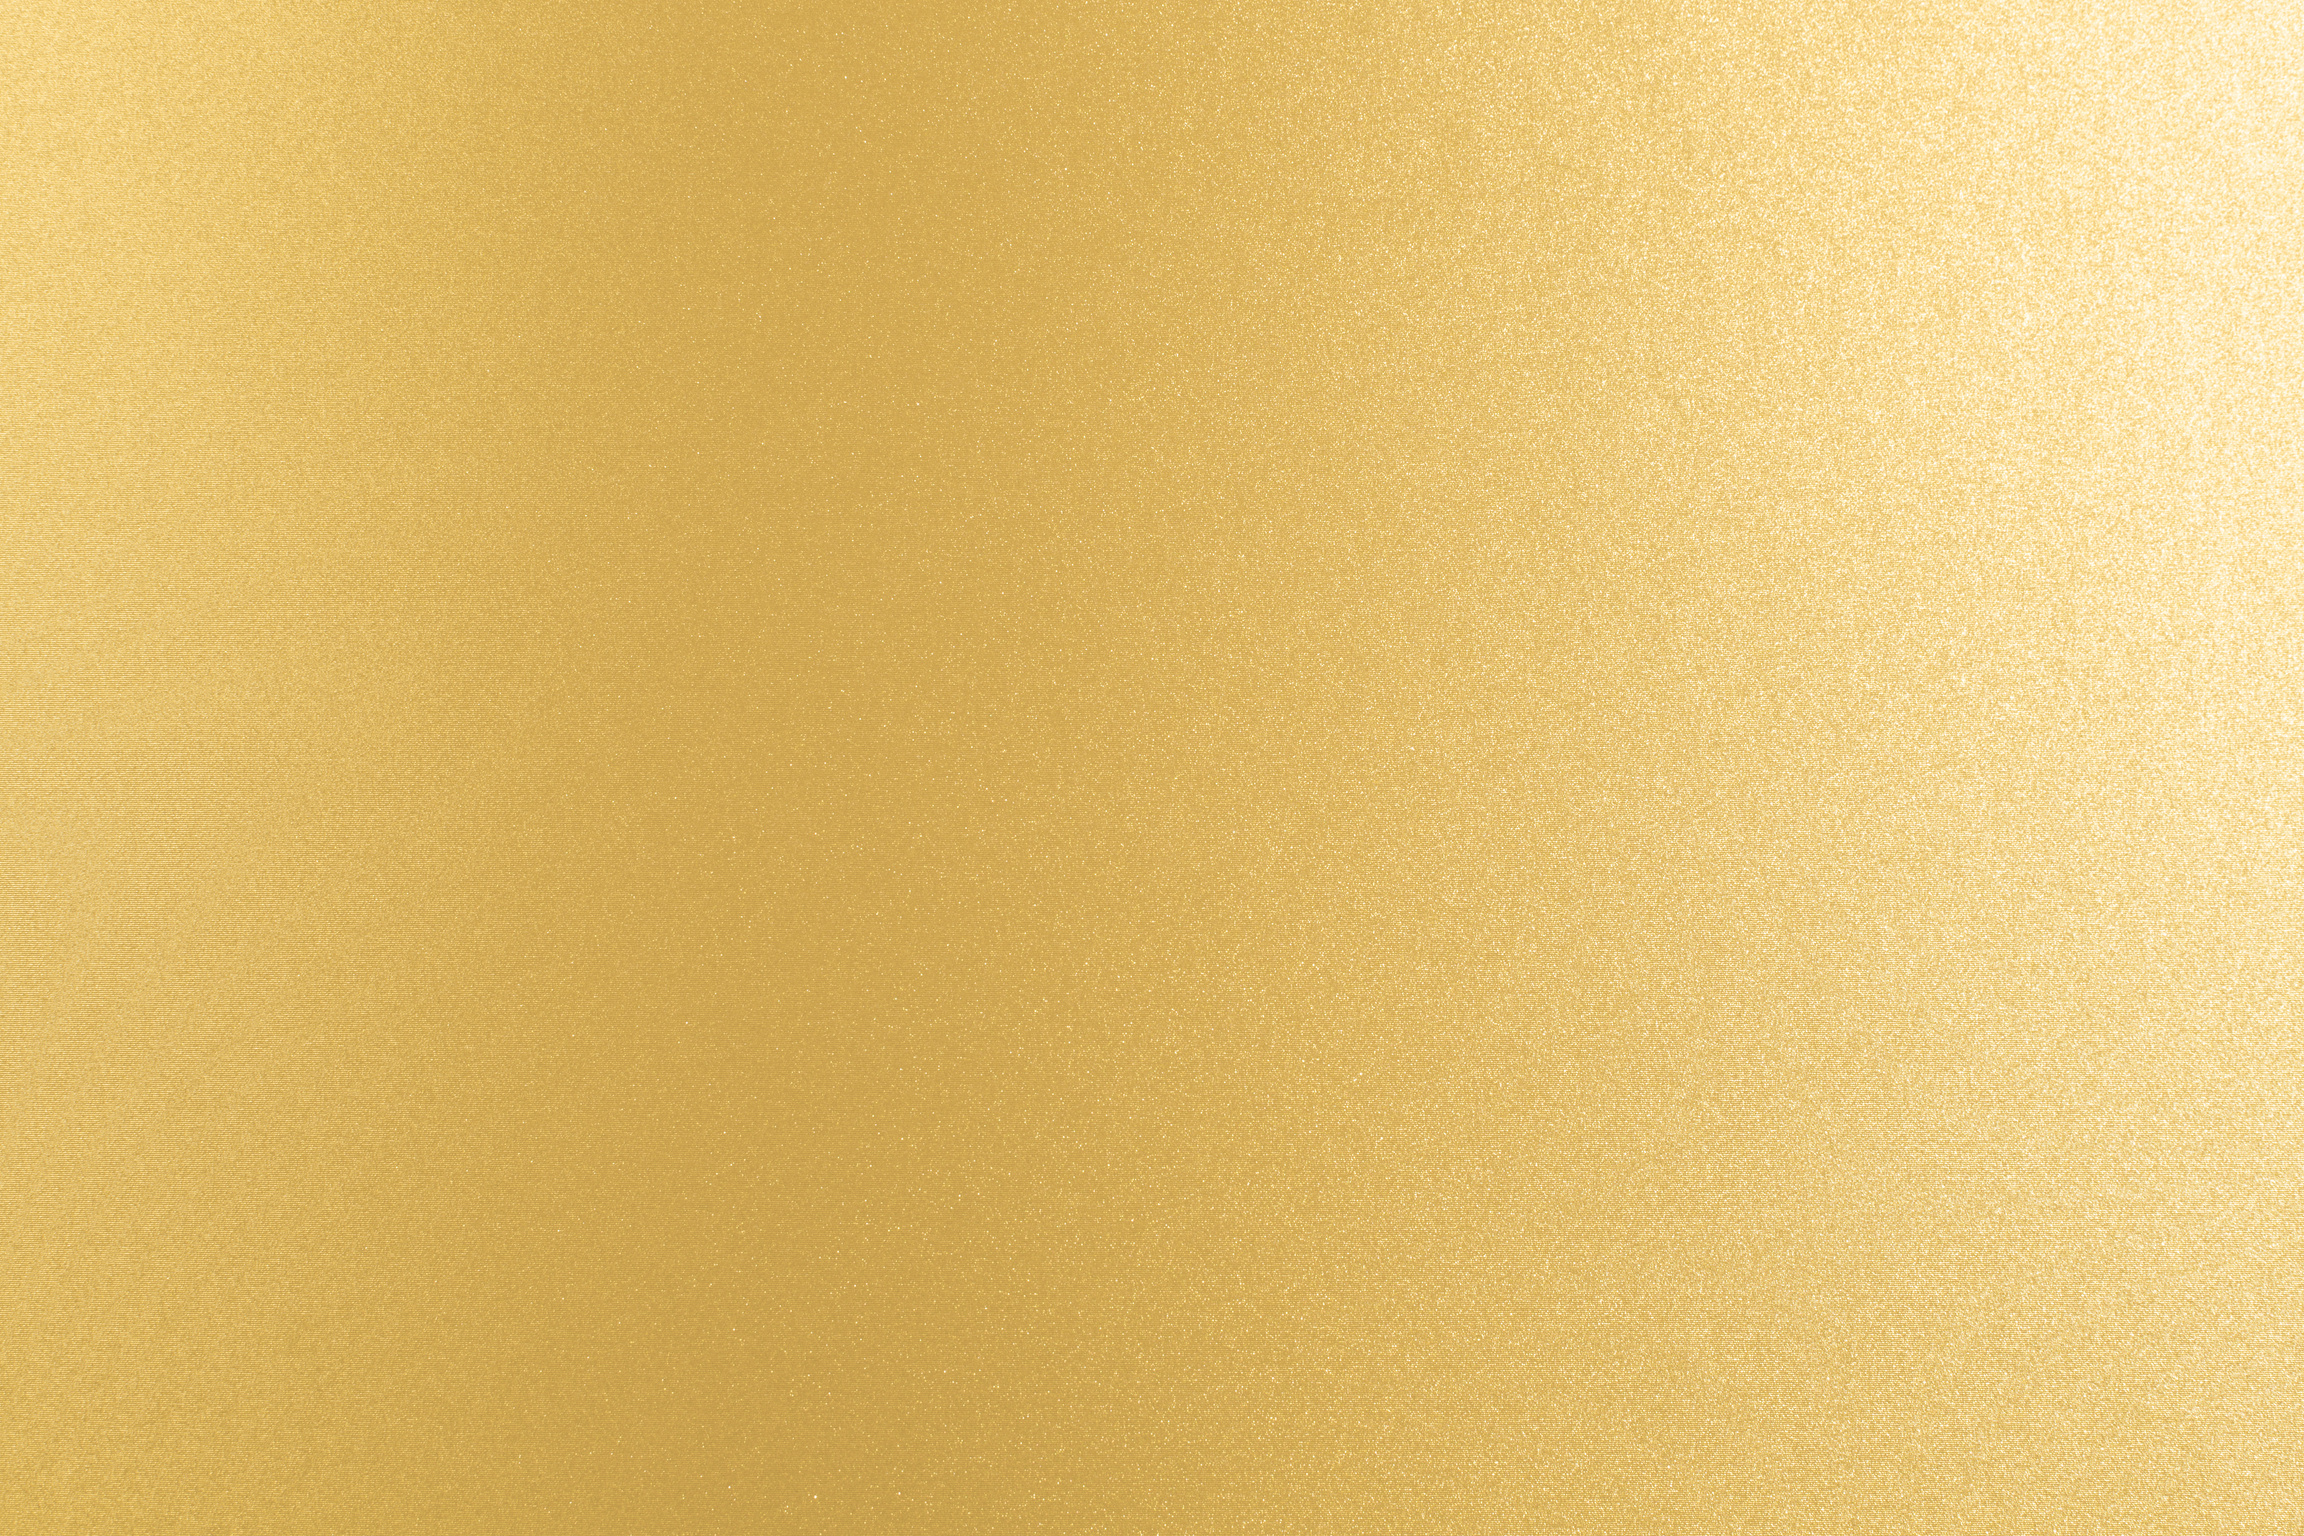 Golden paper texture background.